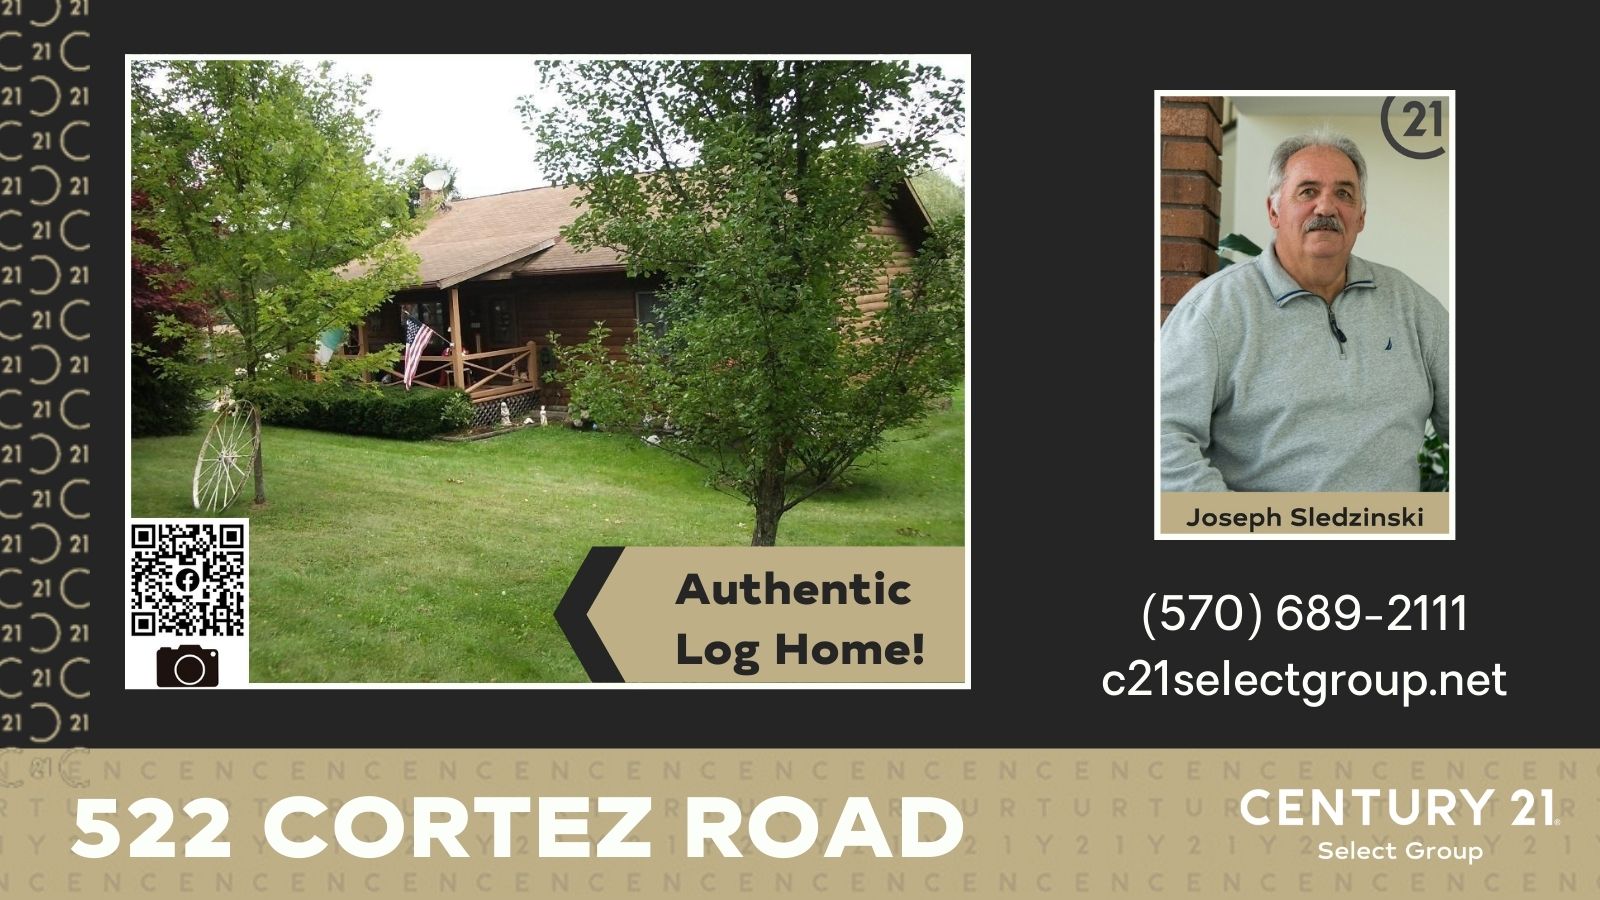 522 Cortez Road: Jefferson Township Log Home